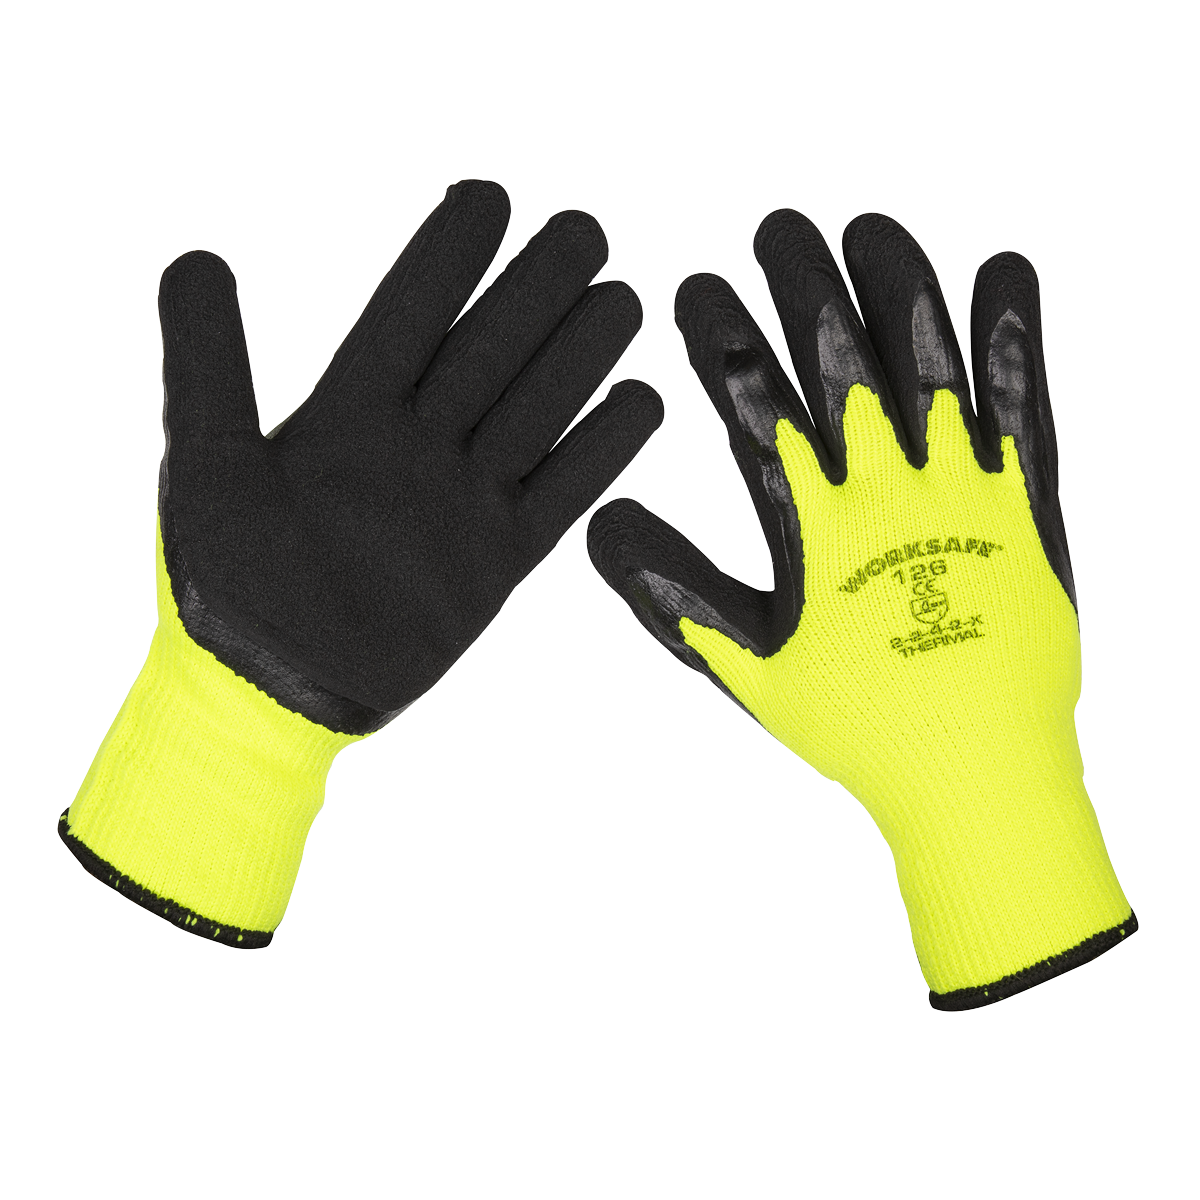 Thermal Super Grip Gloves (Large) - Pair